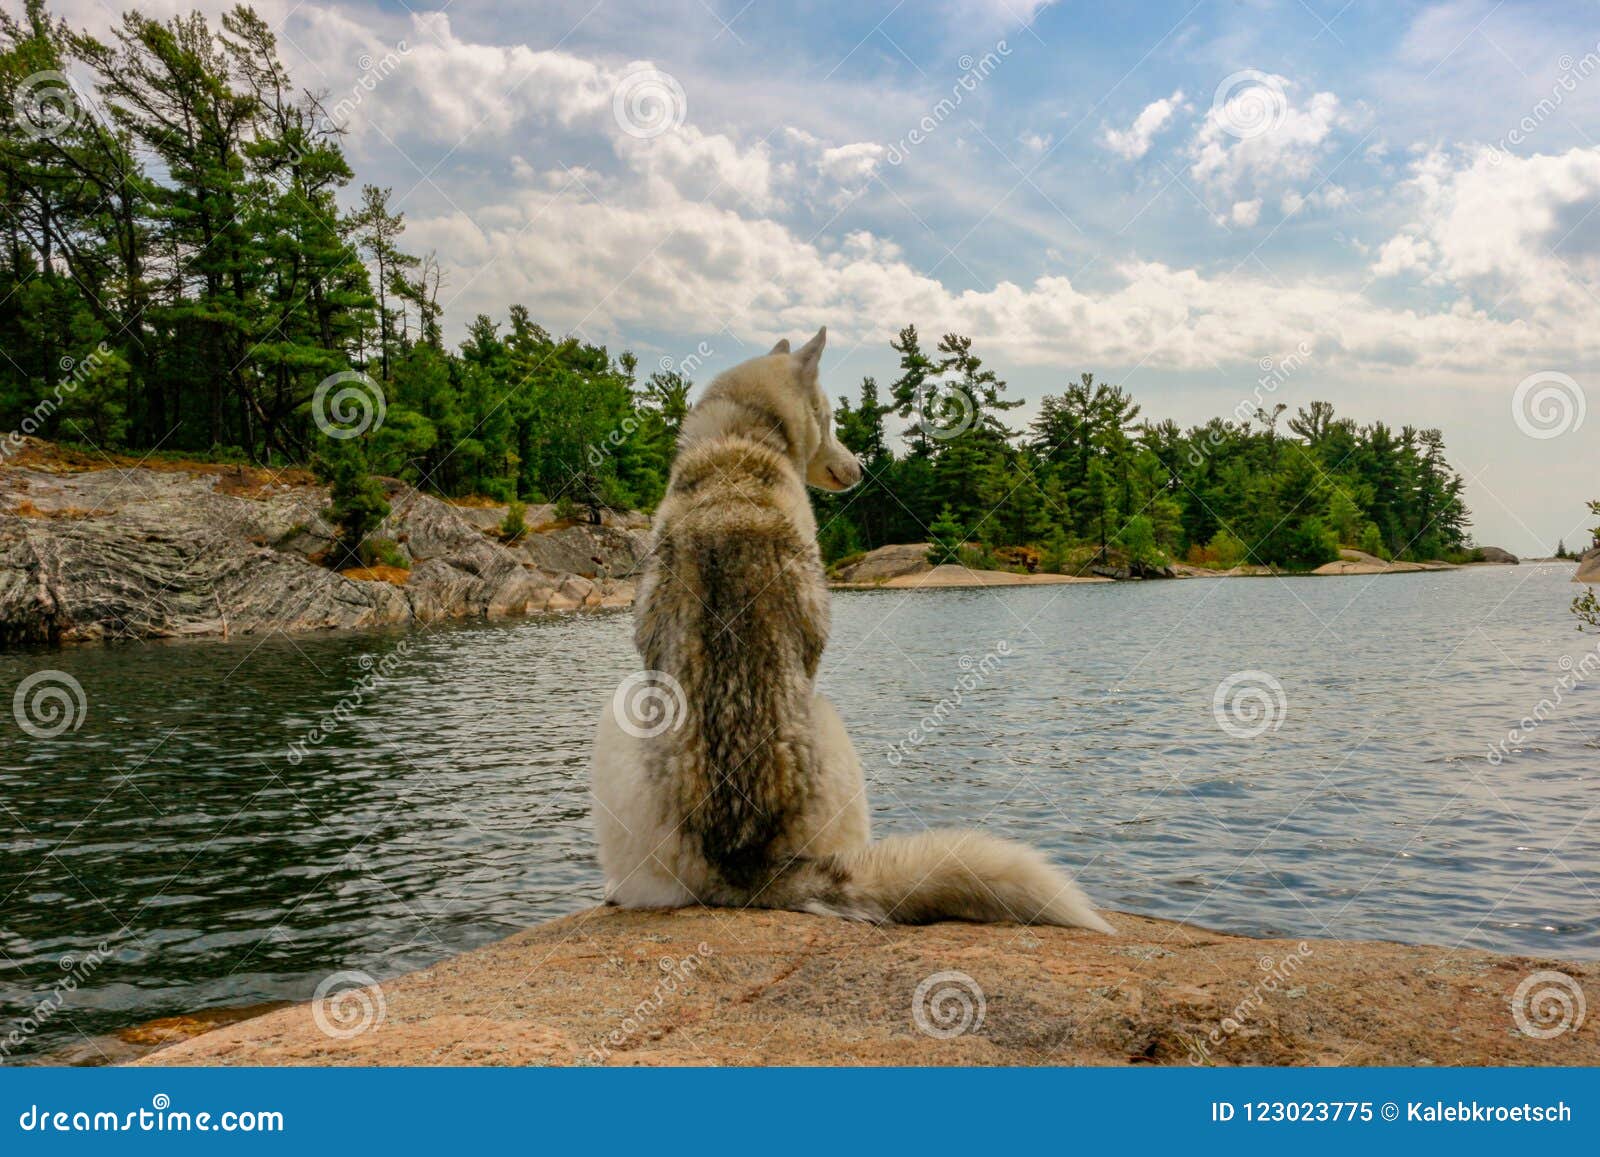 siberian husky on the shores of lake